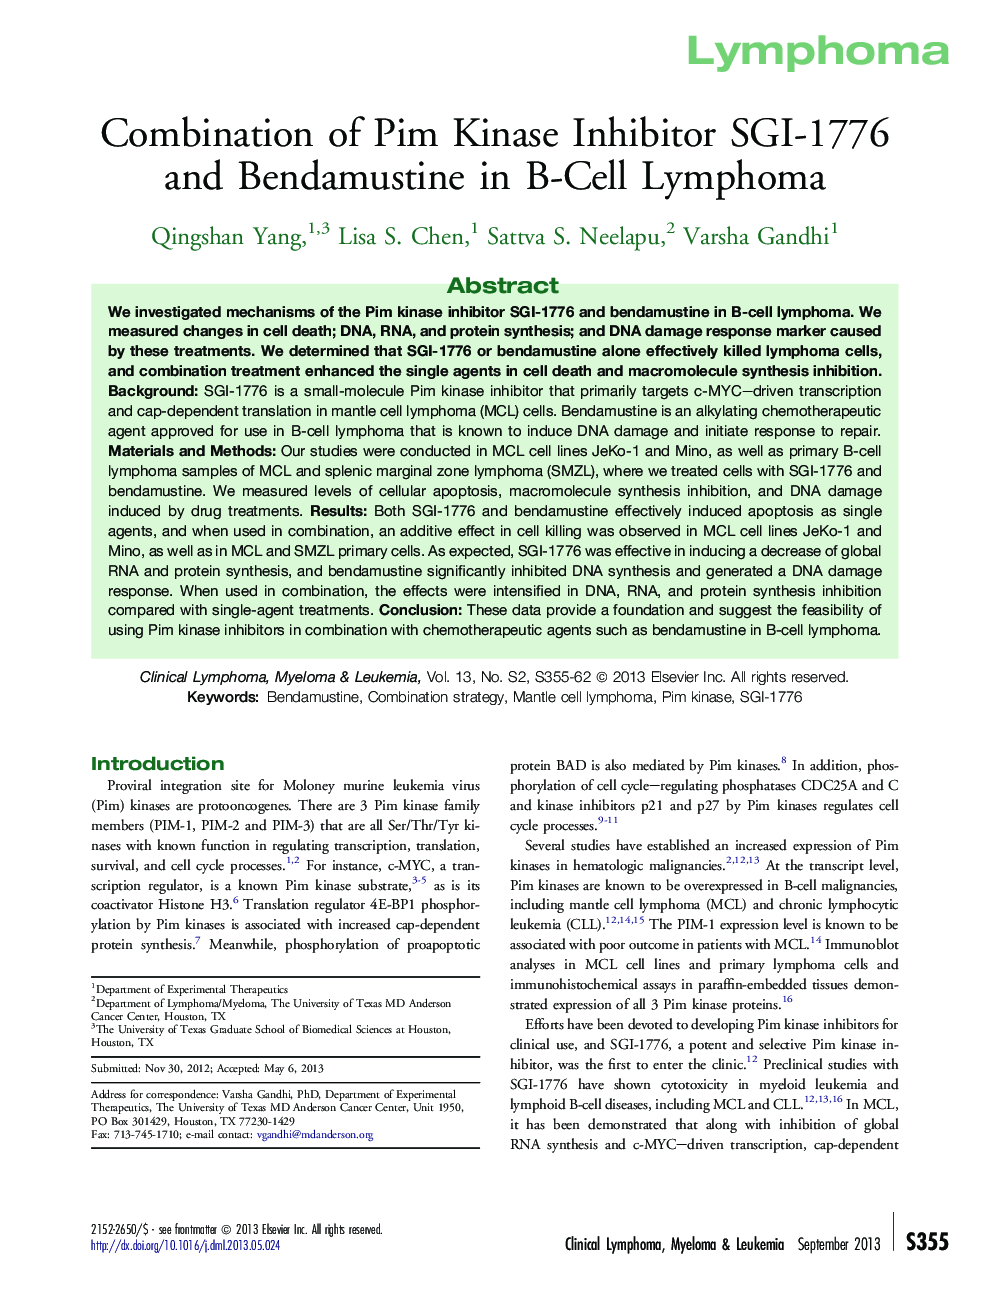 Combination of Pim Kinase Inhibitor SGI-1776 and Bendamustine in B-Cell Lymphoma